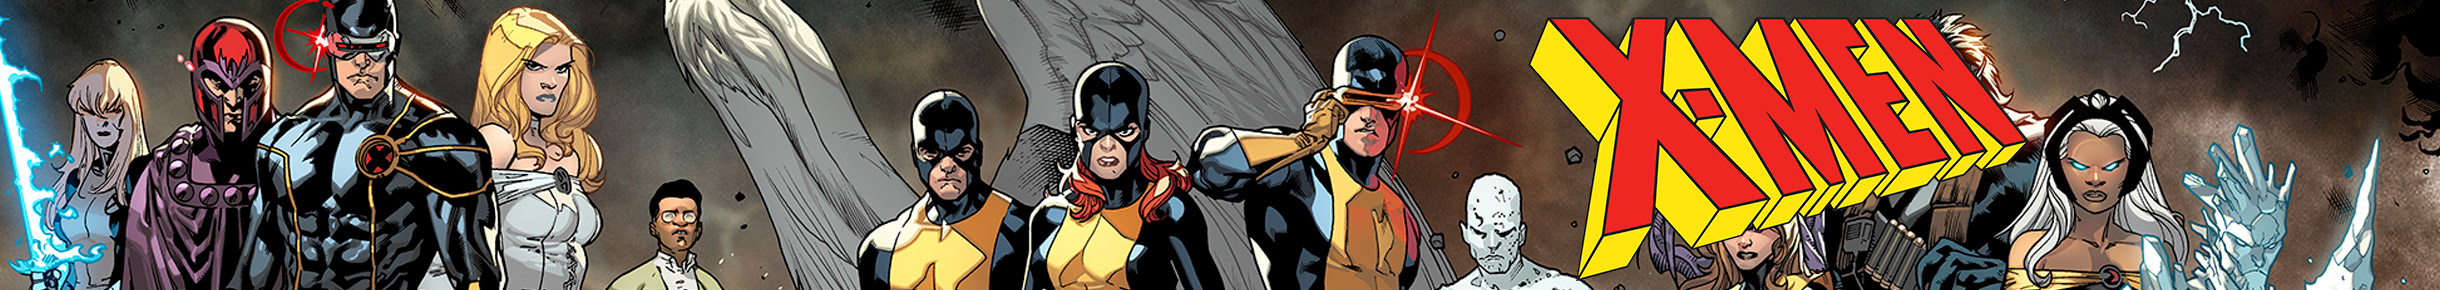 X-Men & Wolverine Magnets Banner